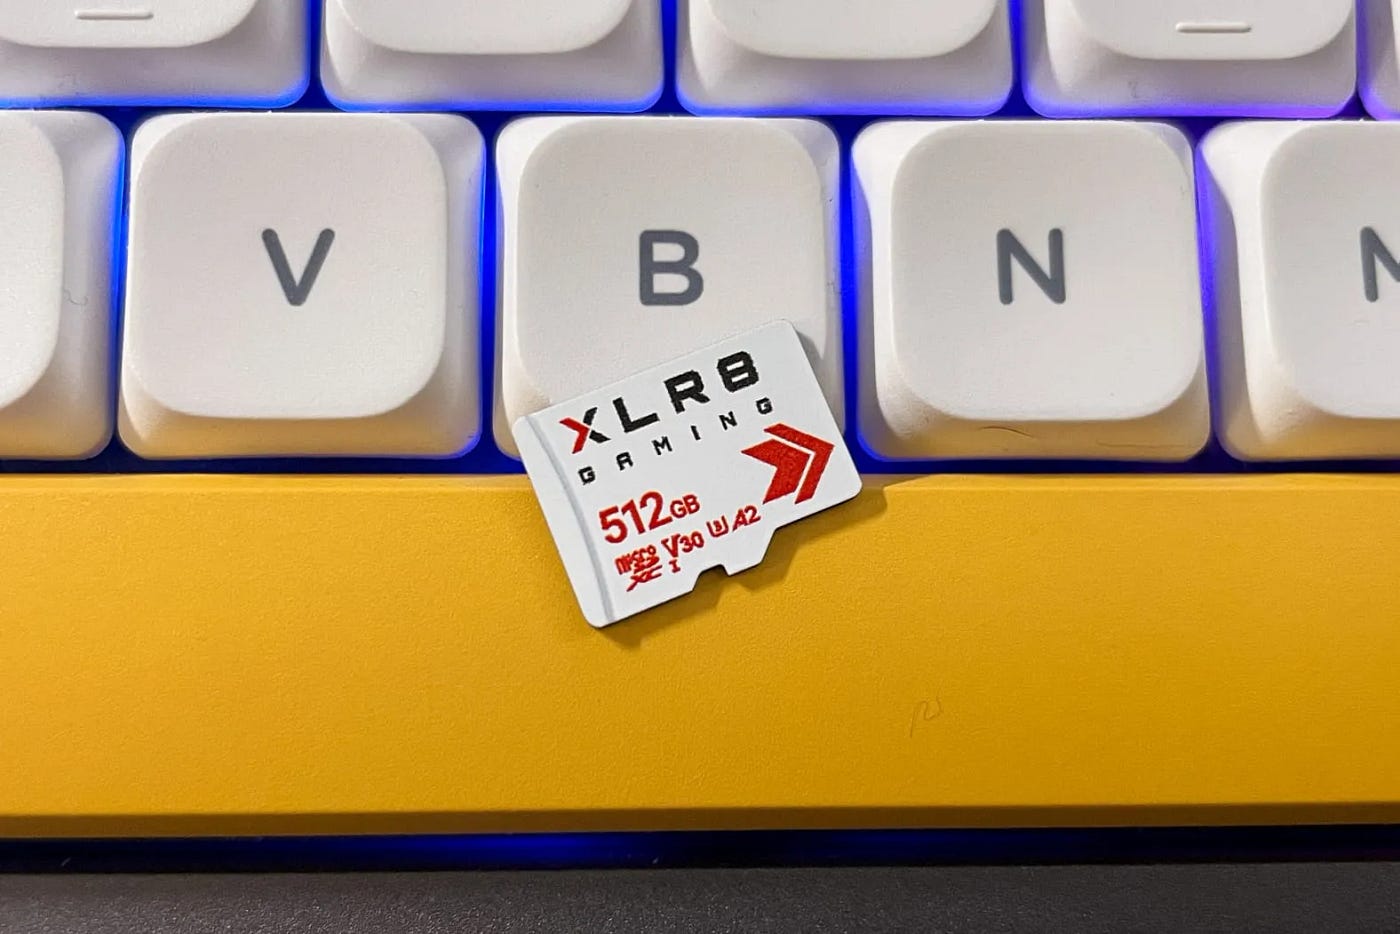 XLR8 Gaming Class 10 U3 V30 microSD Flash Memory Card